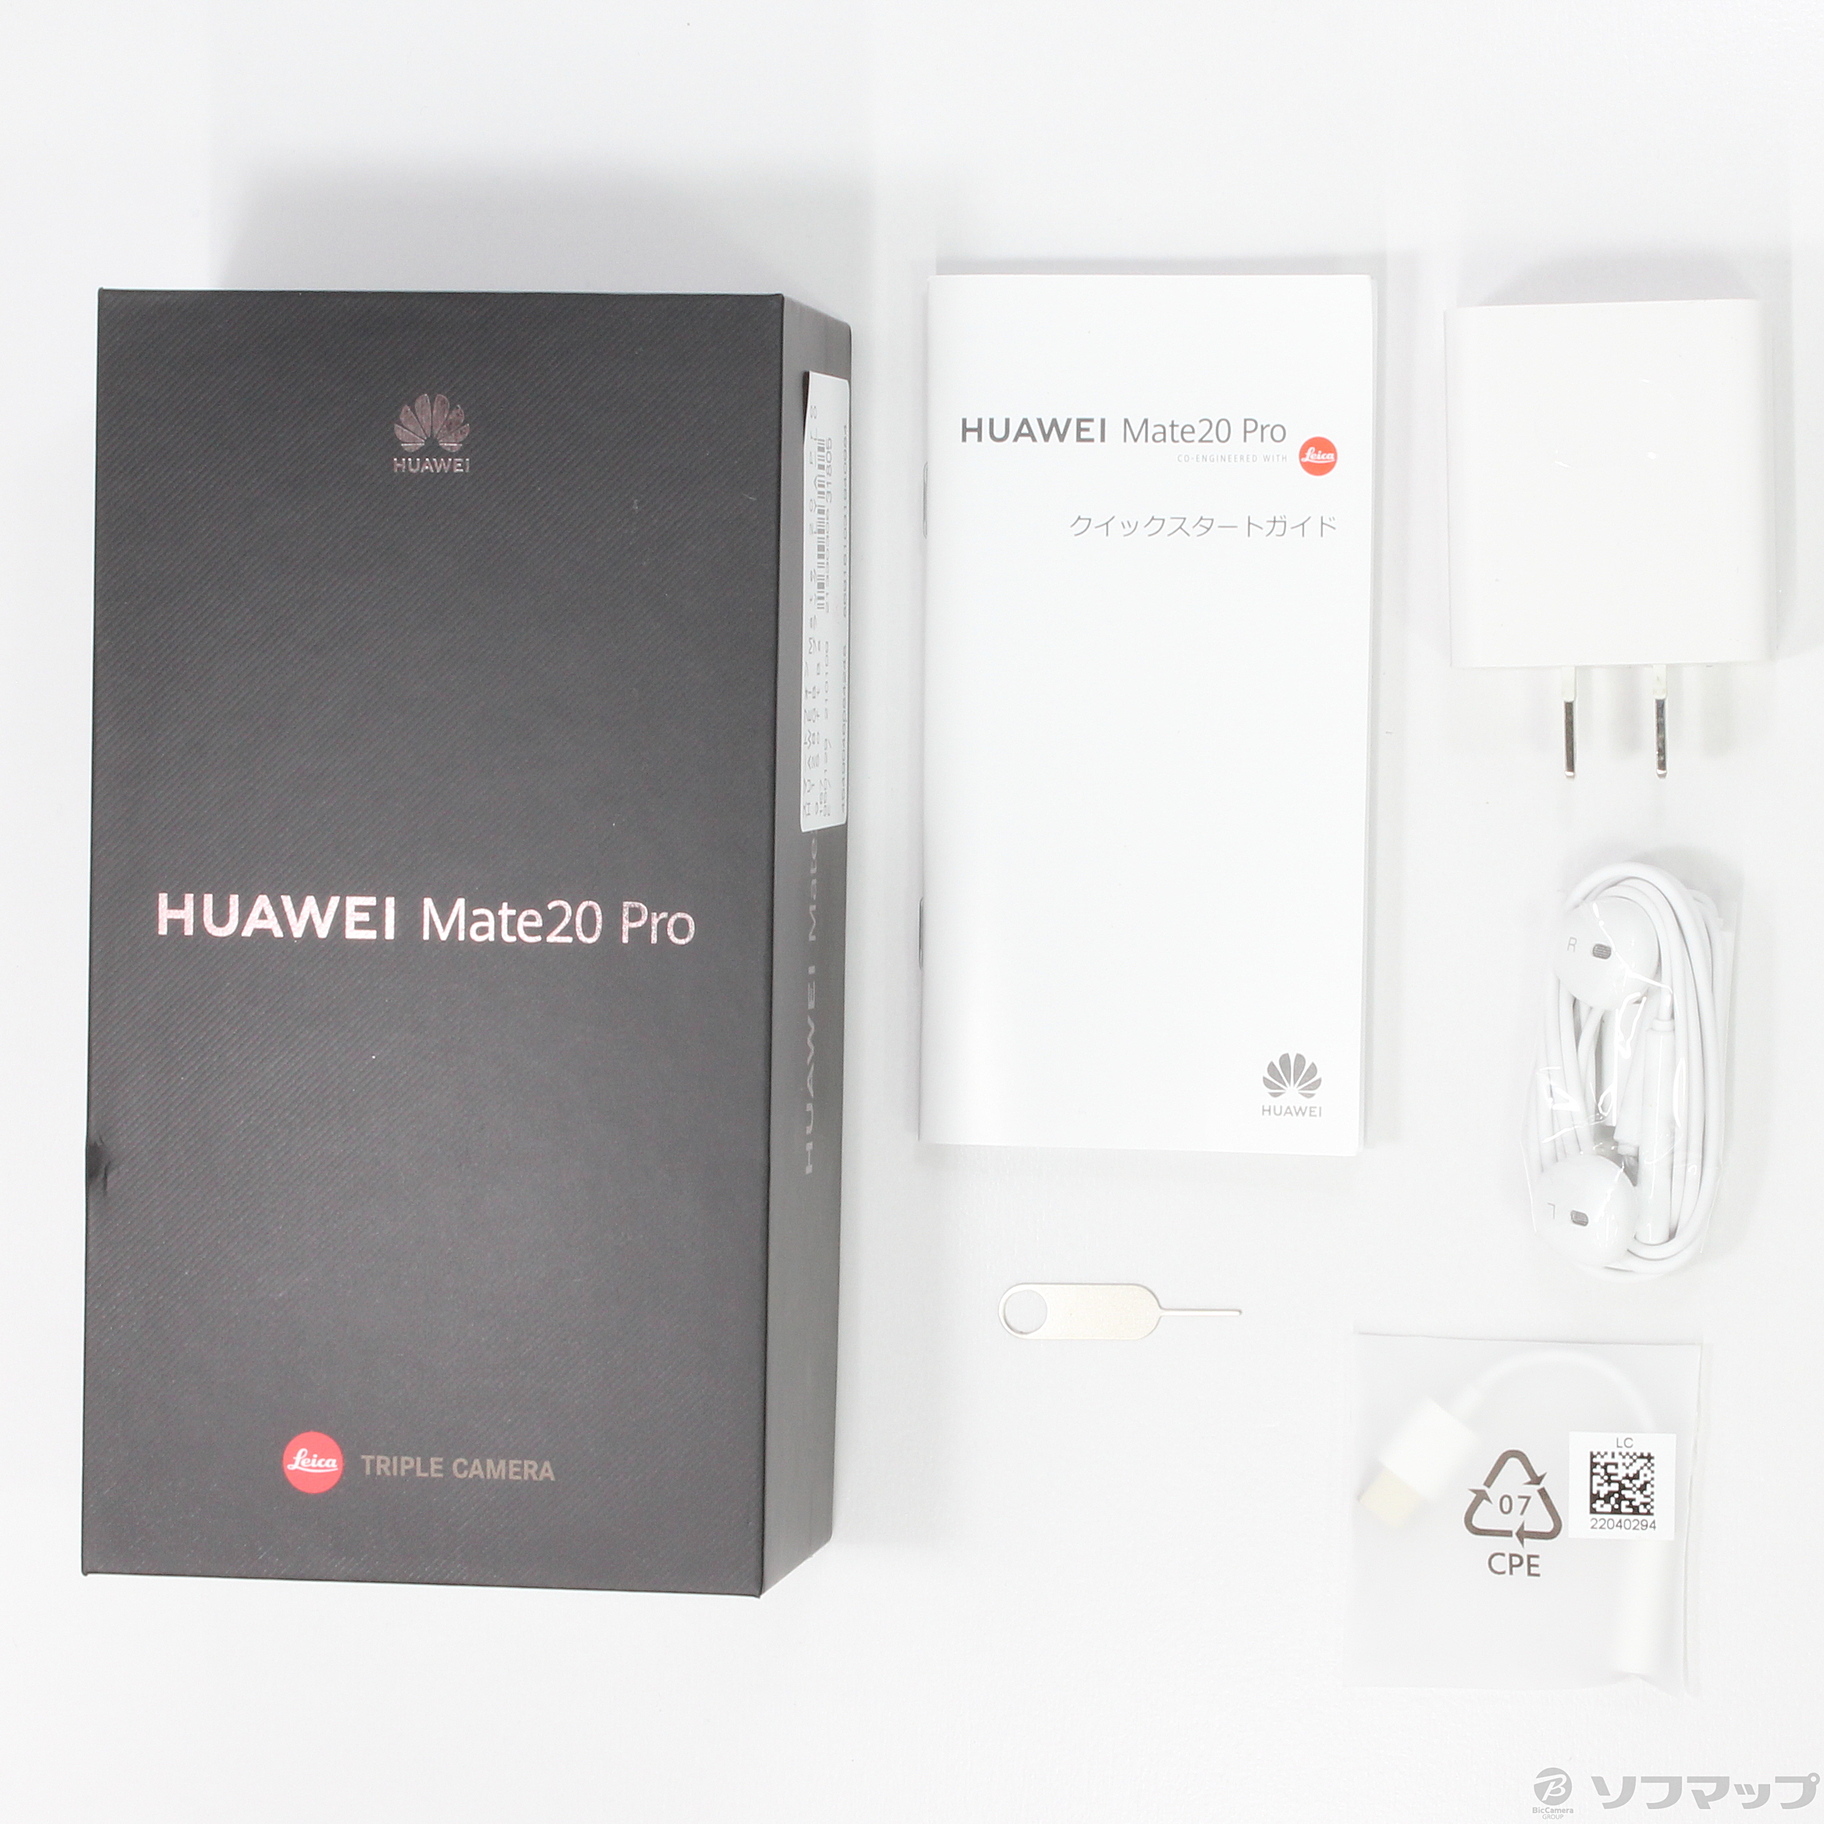 HUAWEI Mate 20 Pro ブラック 新品 未使用品